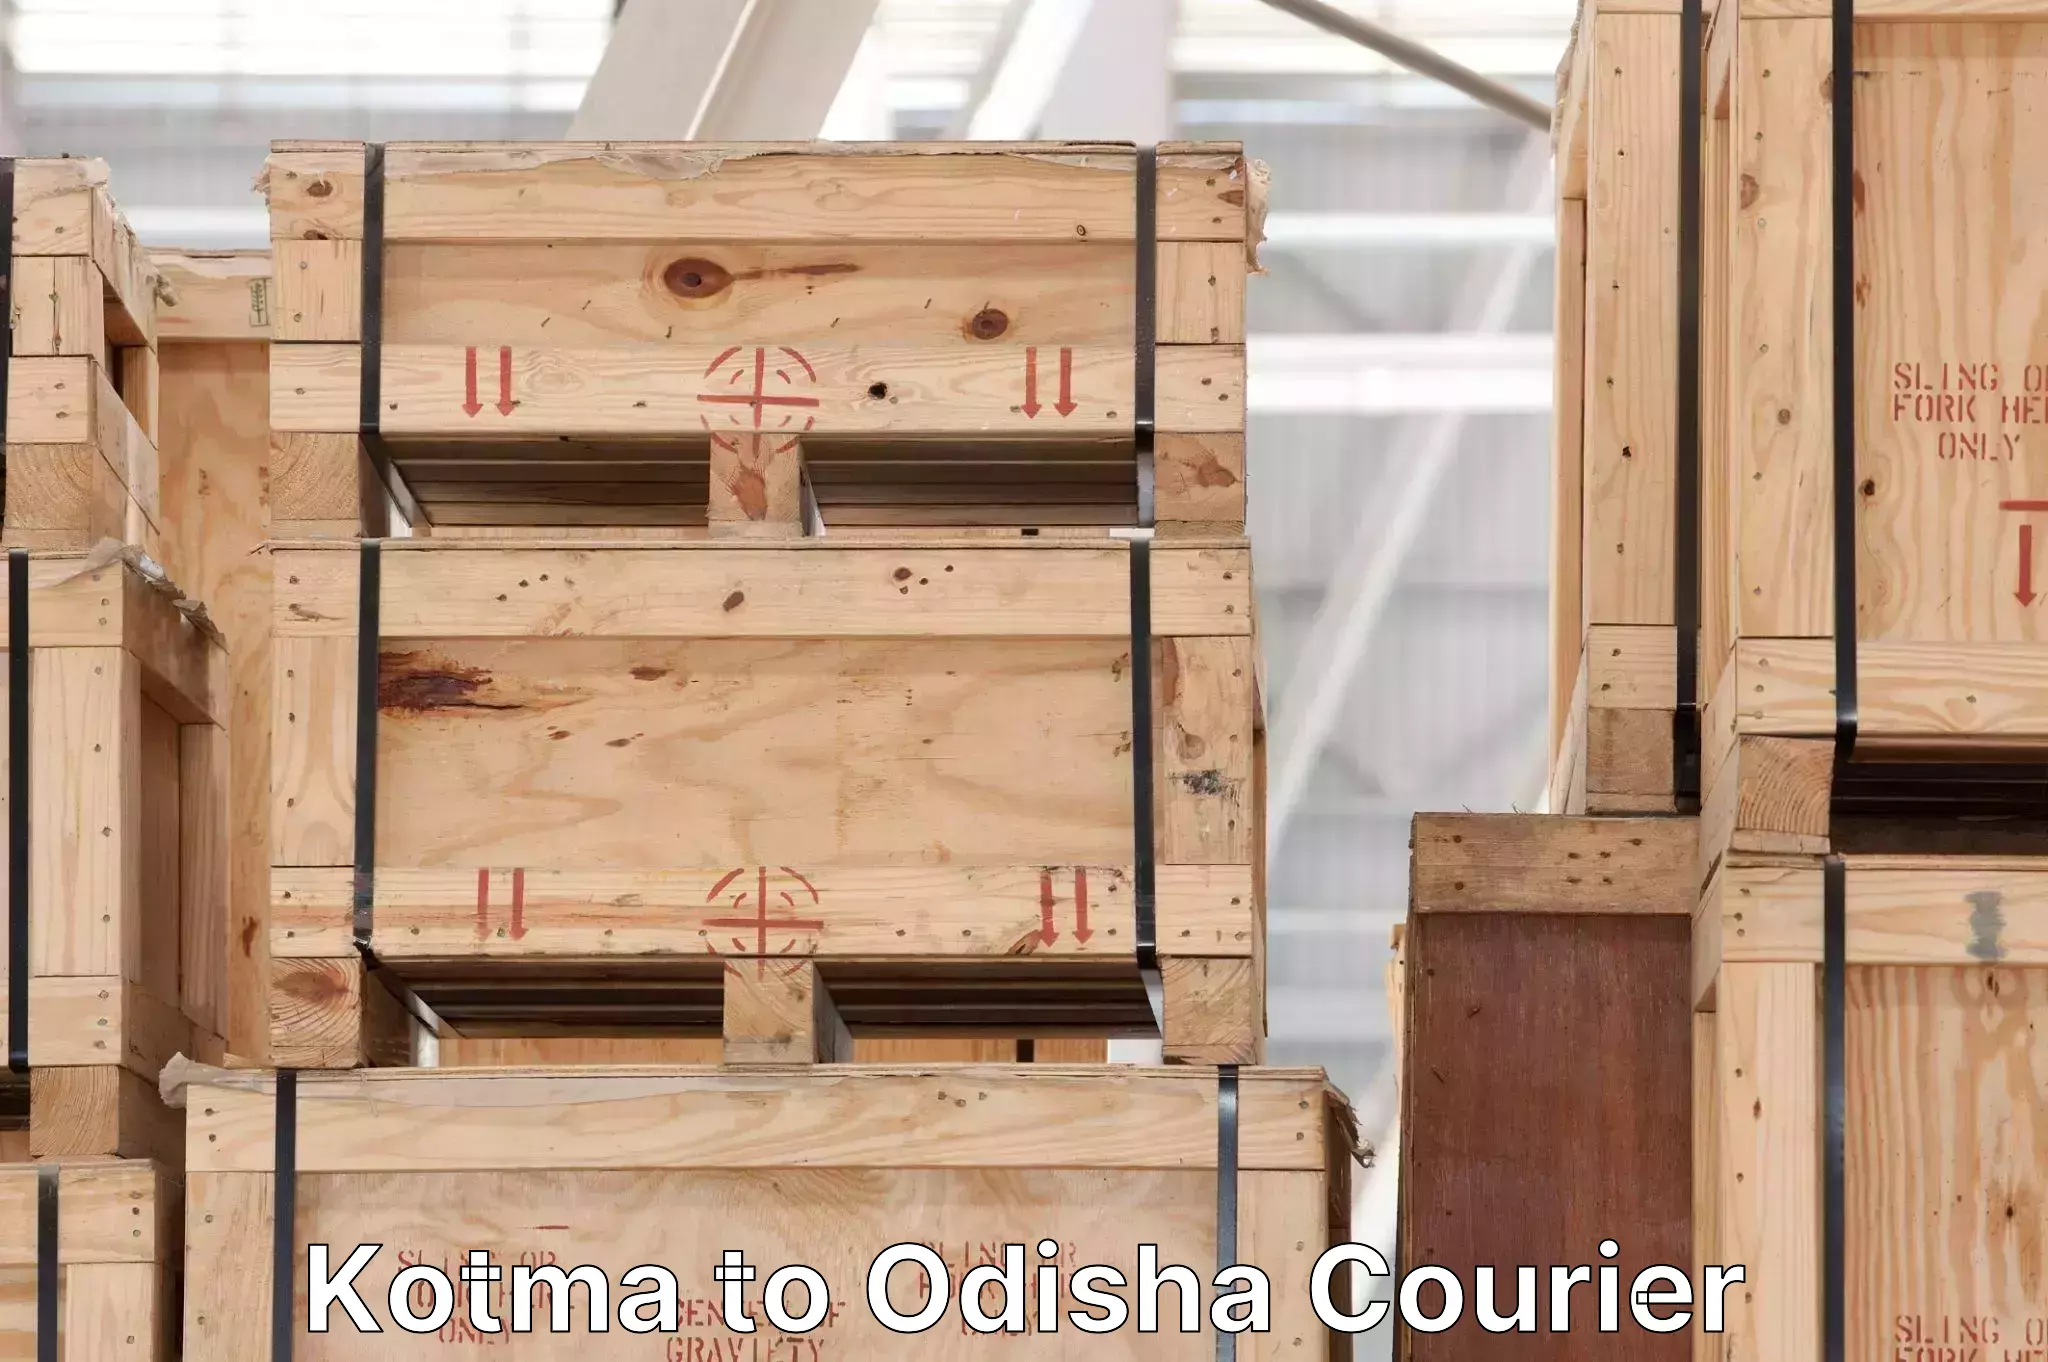 Supply chain efficiency Kotma to Odisha